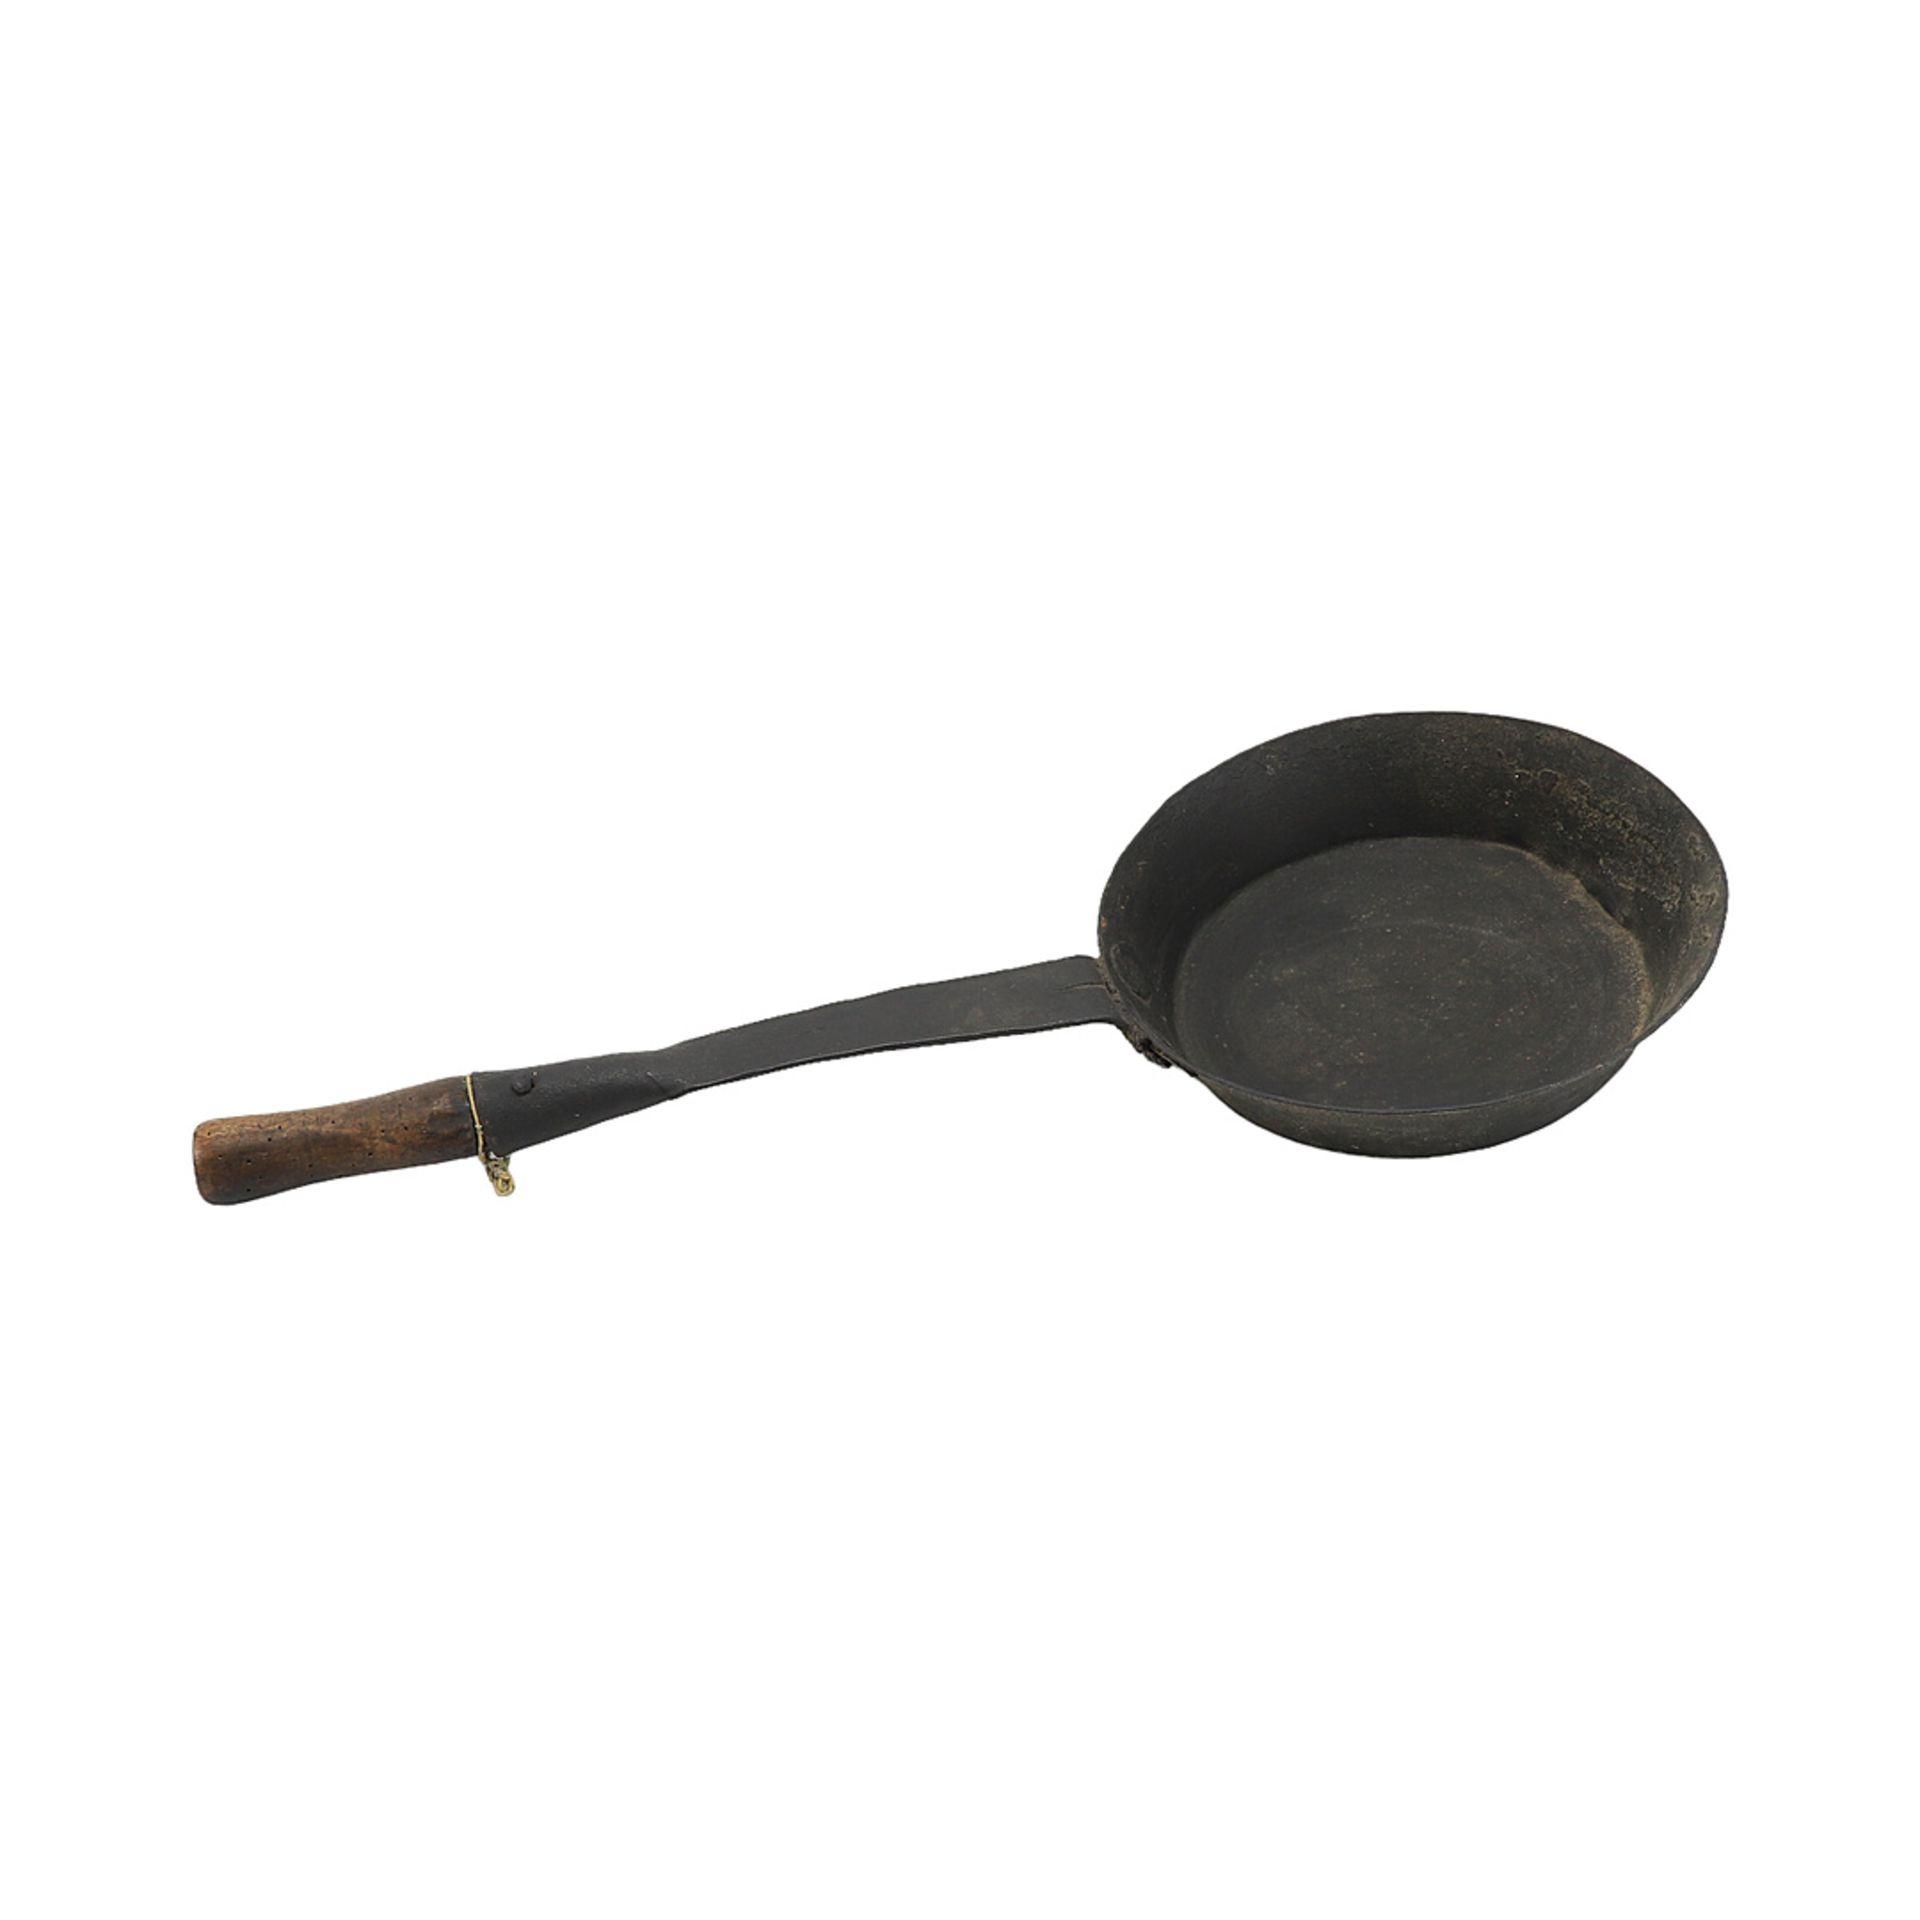 Saxon blacksmith, Pan and hatchet, 19th century - Image 2 of 3